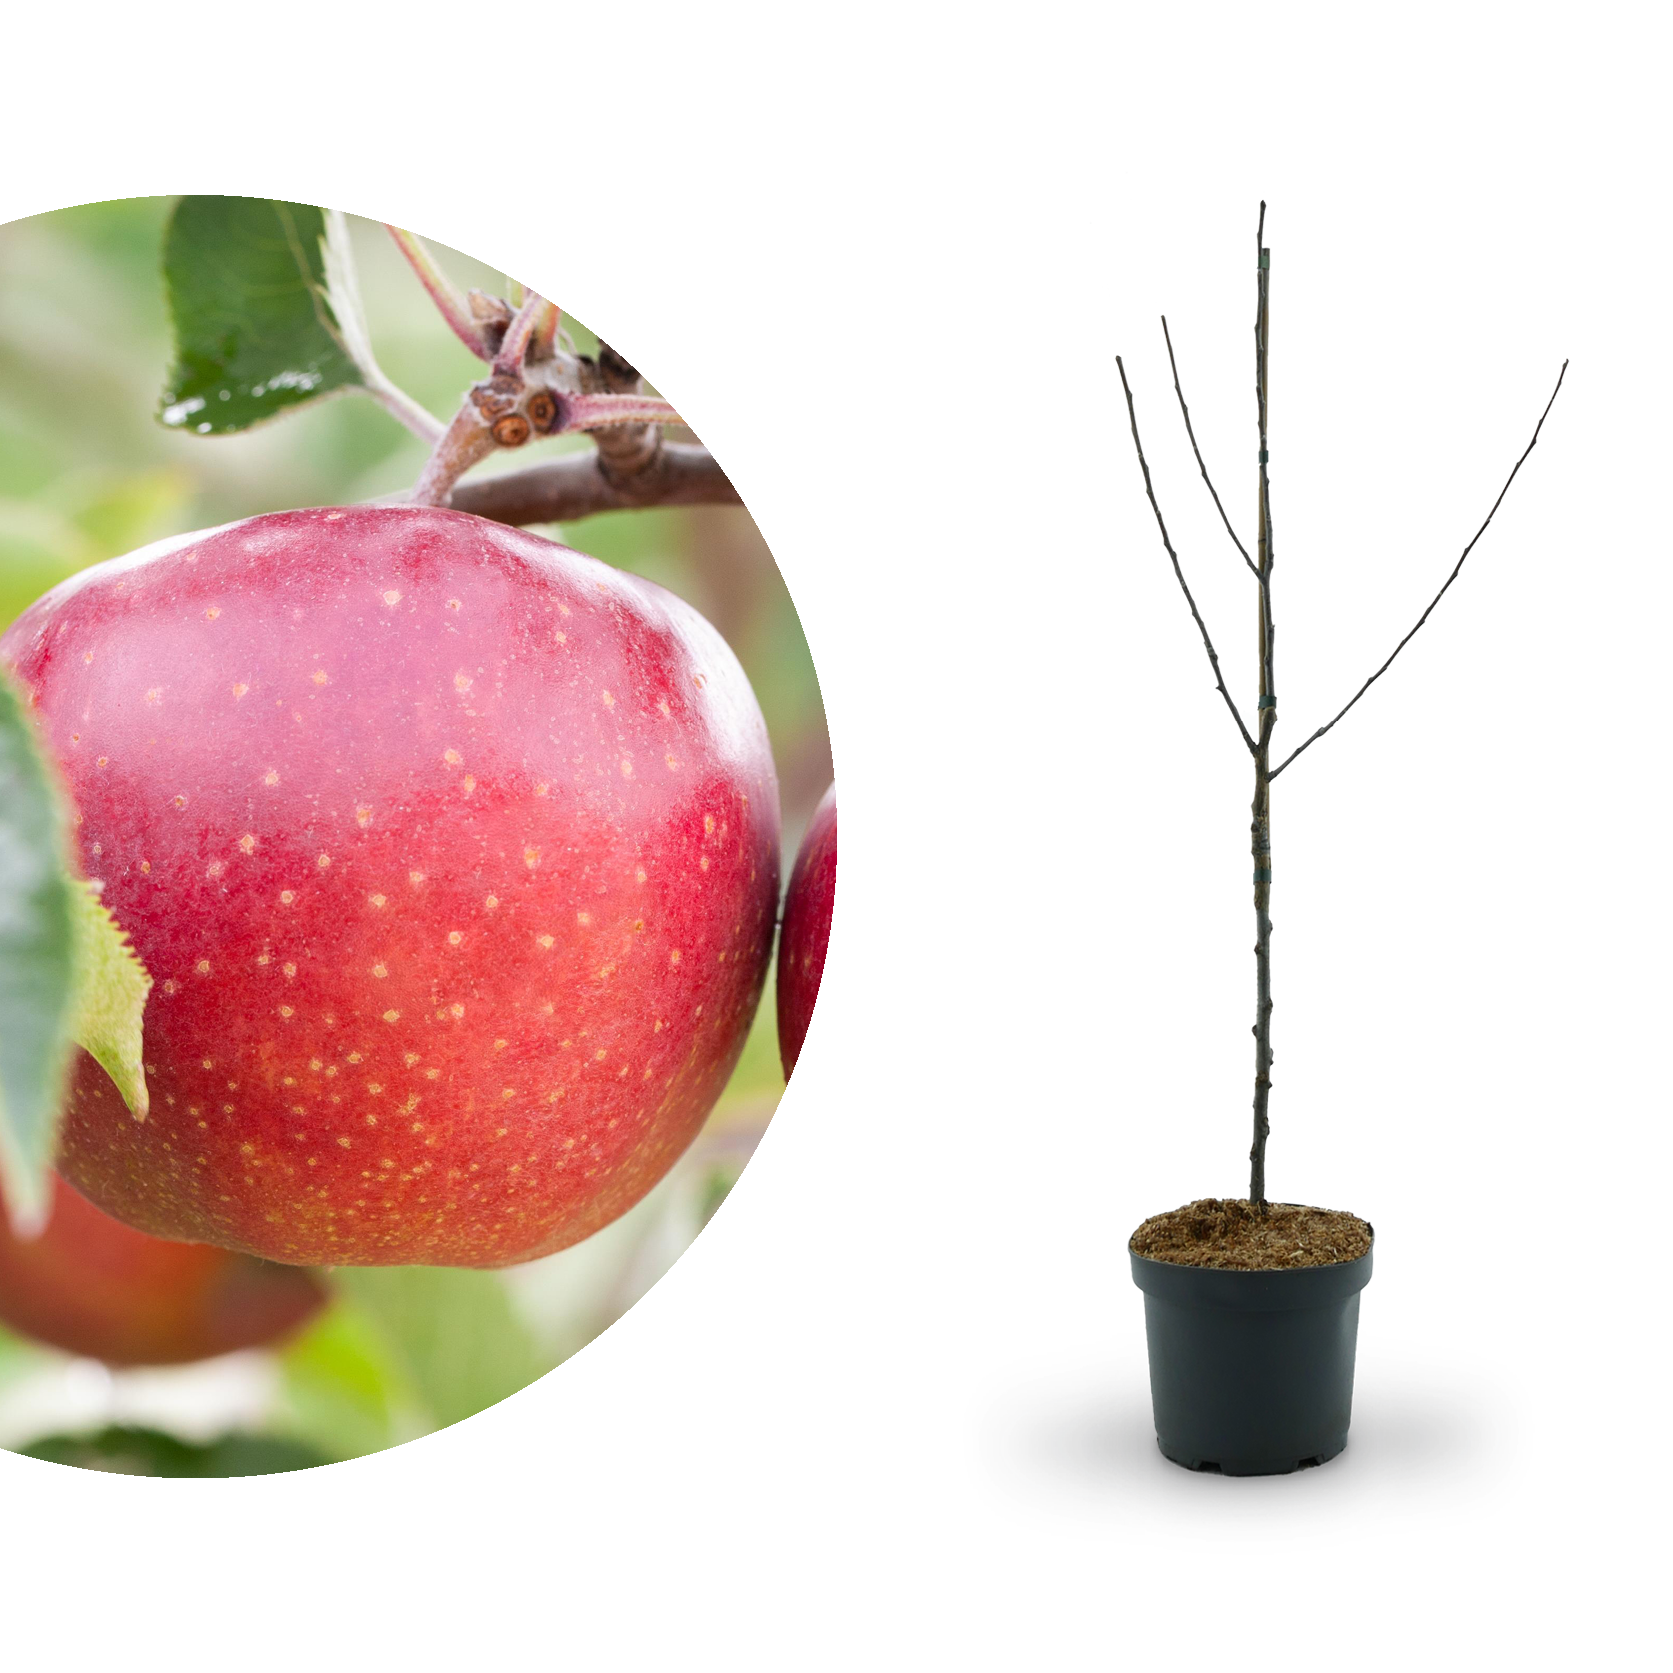 Bio-Apfelbaum 'Jonagold'® Winterapfel